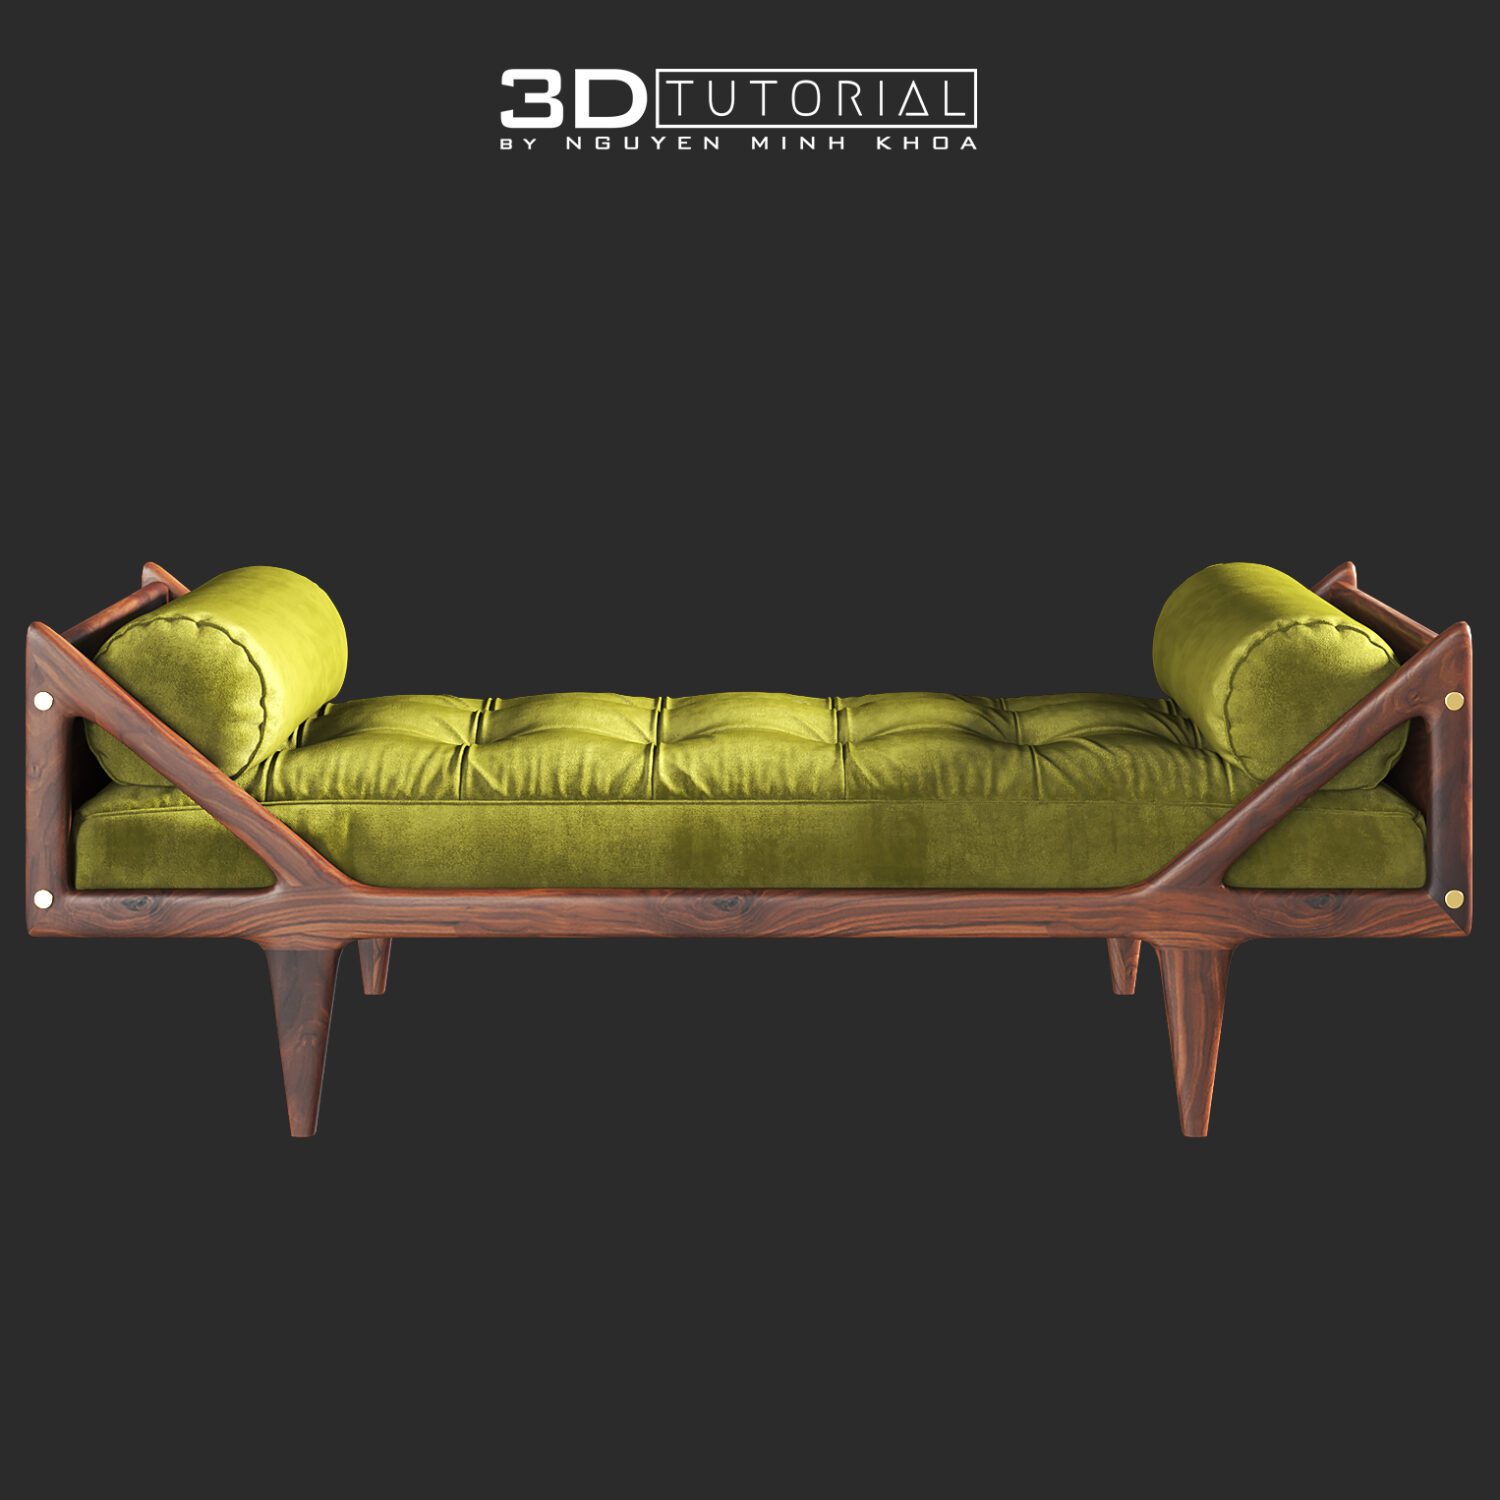 Free 3D Model Bench By Nguyen Minh Khoa